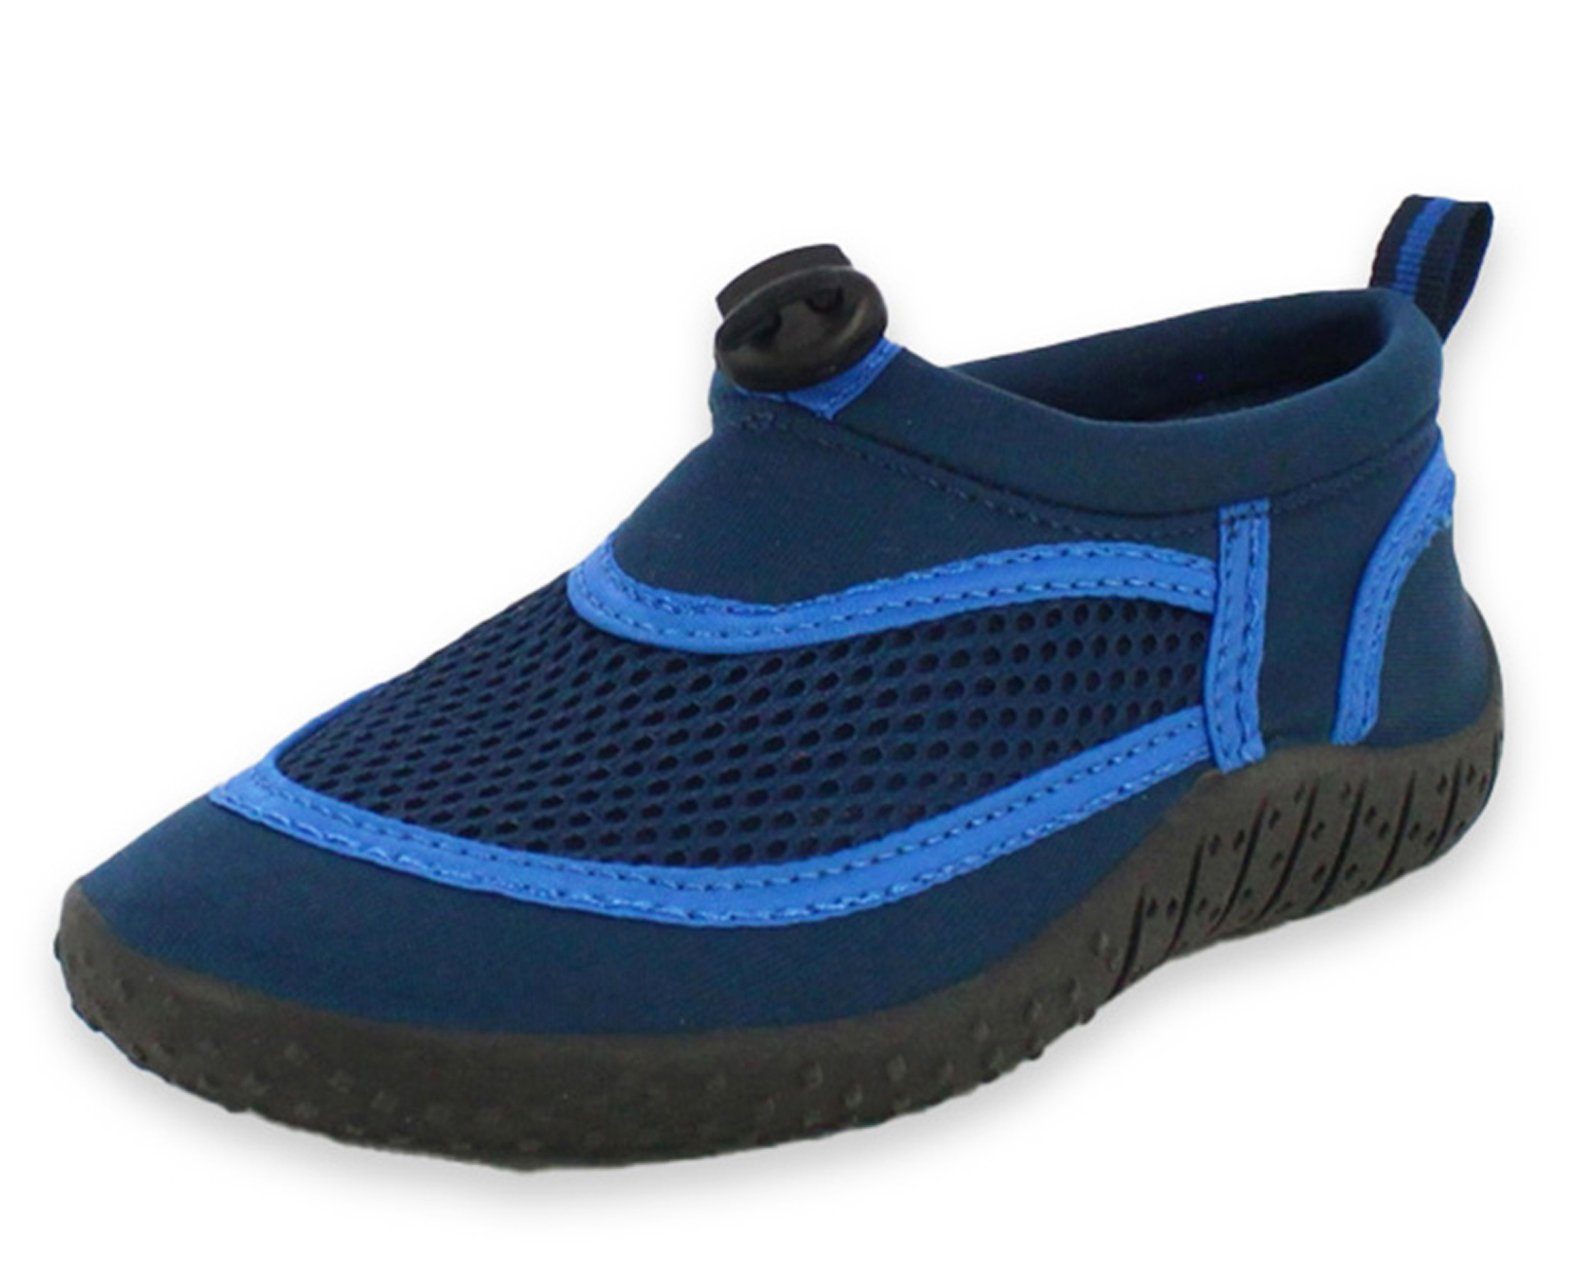 Beck Badeschuh Aqua Badeschuh (leichte, flexible, stabile Schuhe, für geschützte Füße an Pool und Strand) rutschfeste flexible Laufsohle, schnelltrocknend dunkelblau